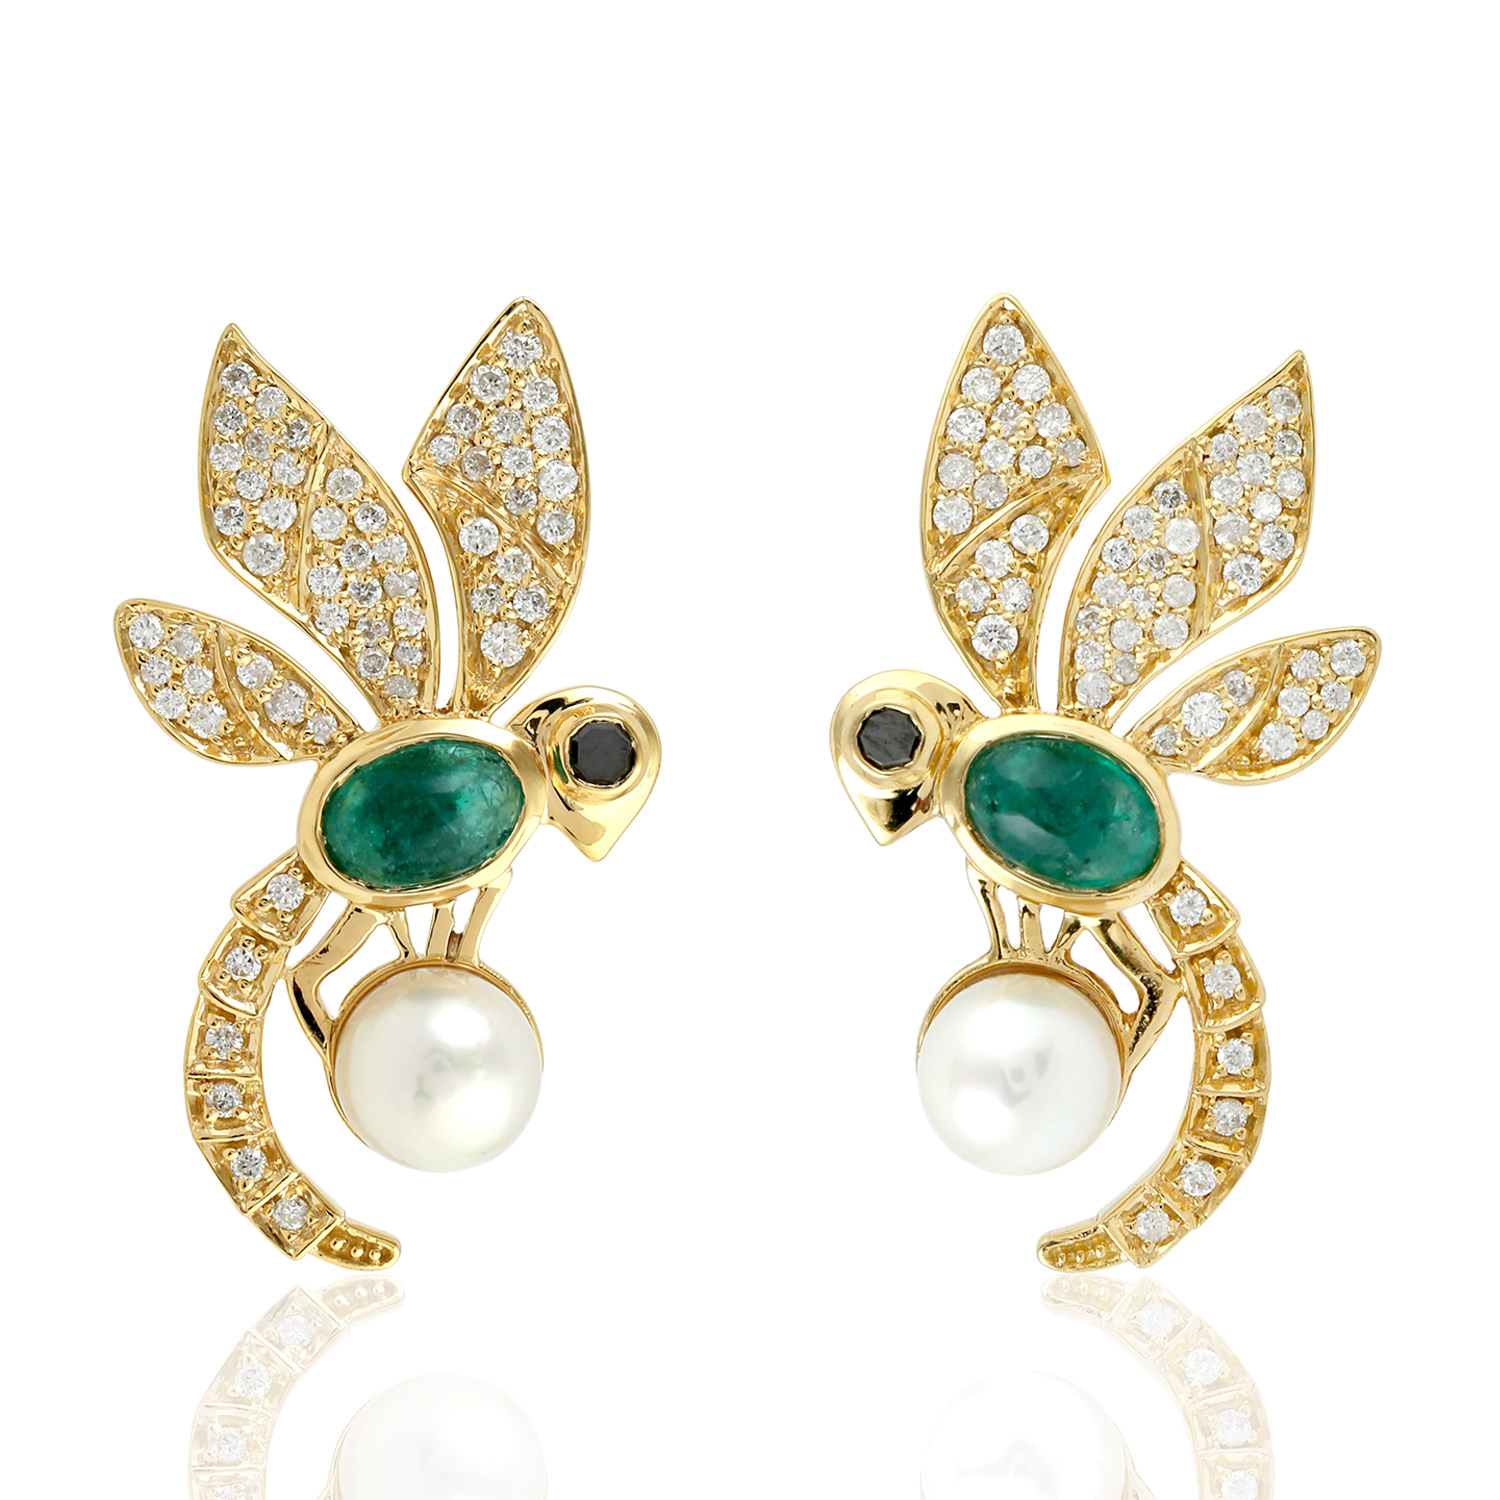 Easter Sale 4.61 Natural Emerald Stud Earrings 18k Yellow Gold Diamond Jewelry | eBay